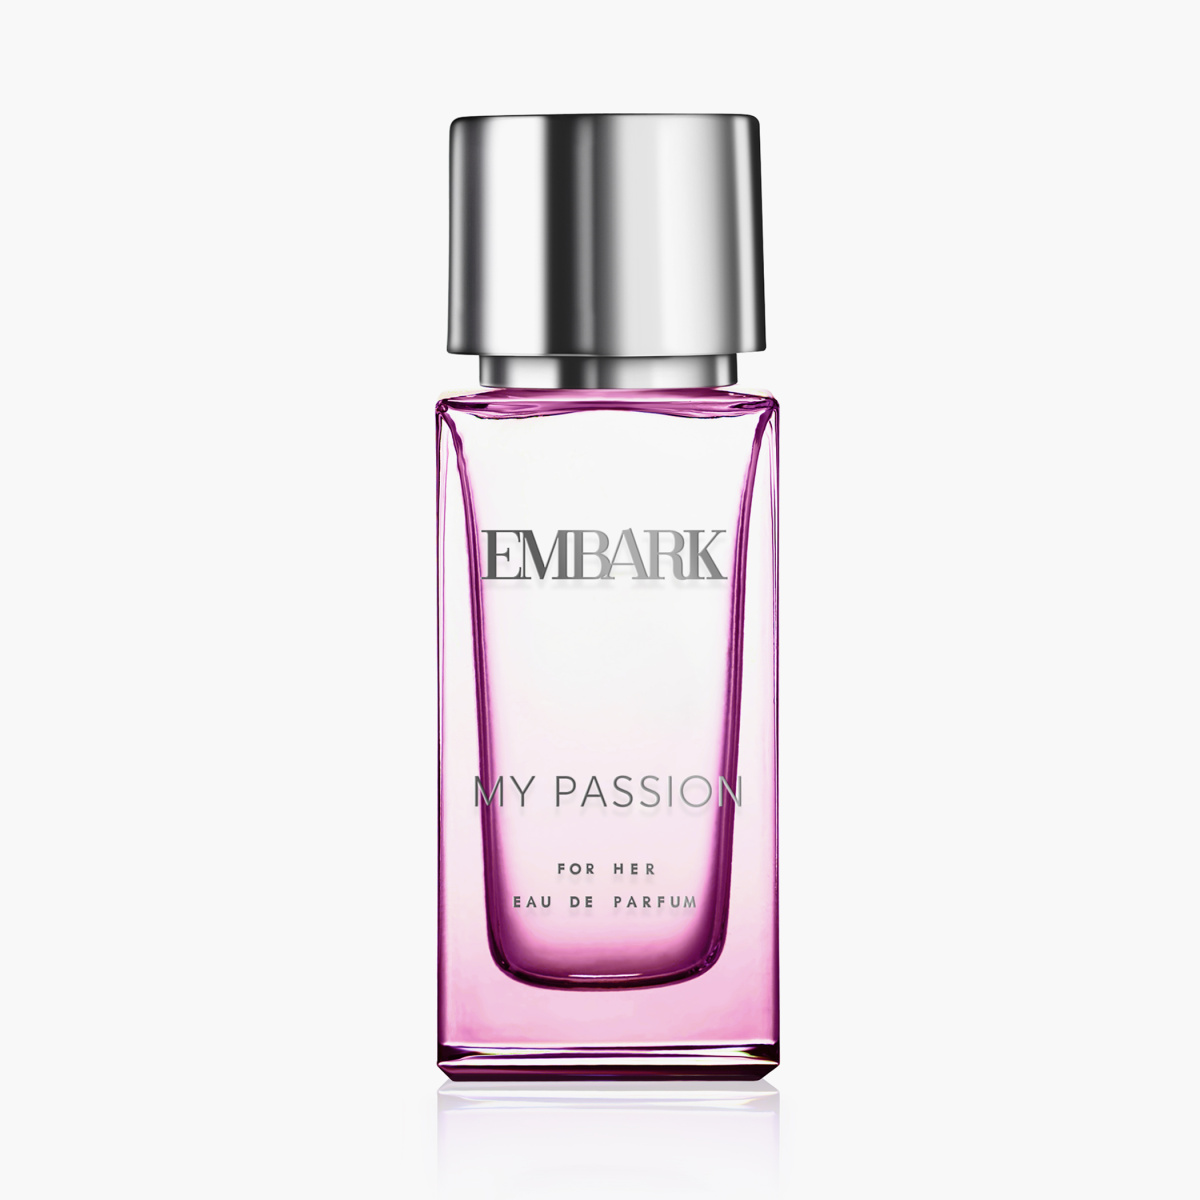 EMBARK My Passion For Her Eau De Parfum - 30 ml.